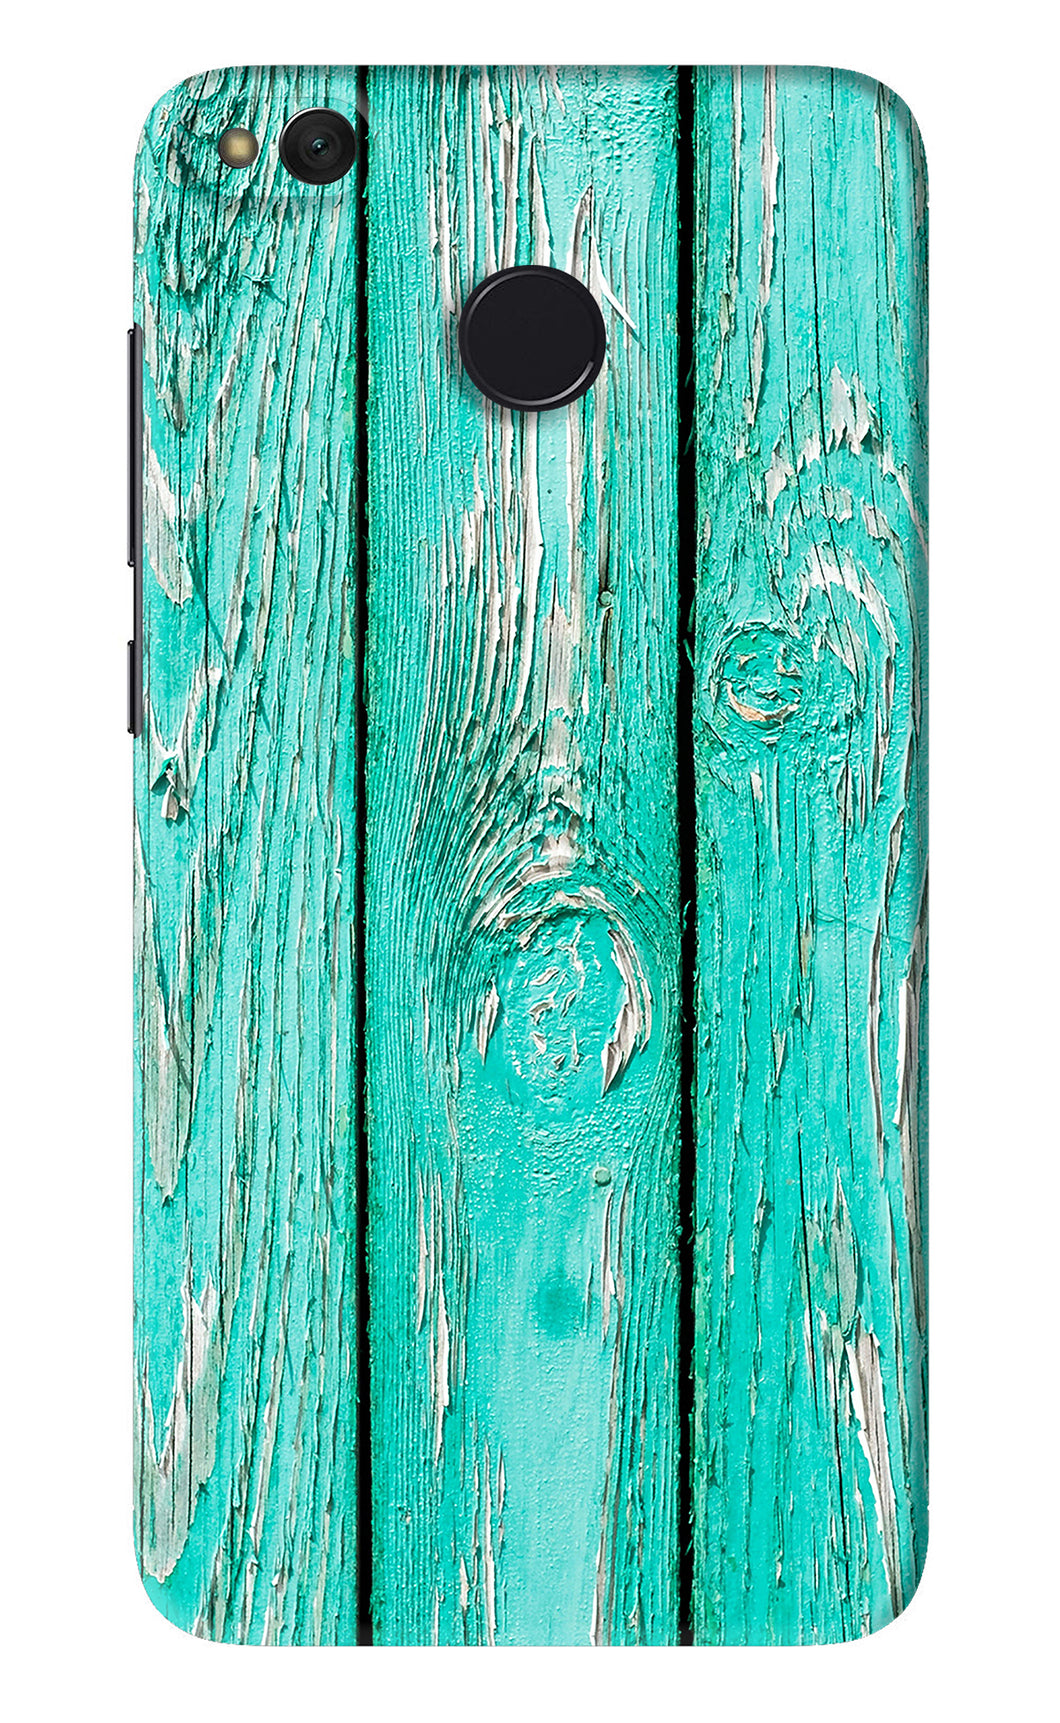 Blue Wood Xiaomi Redmi 4 Back Skin Wrap